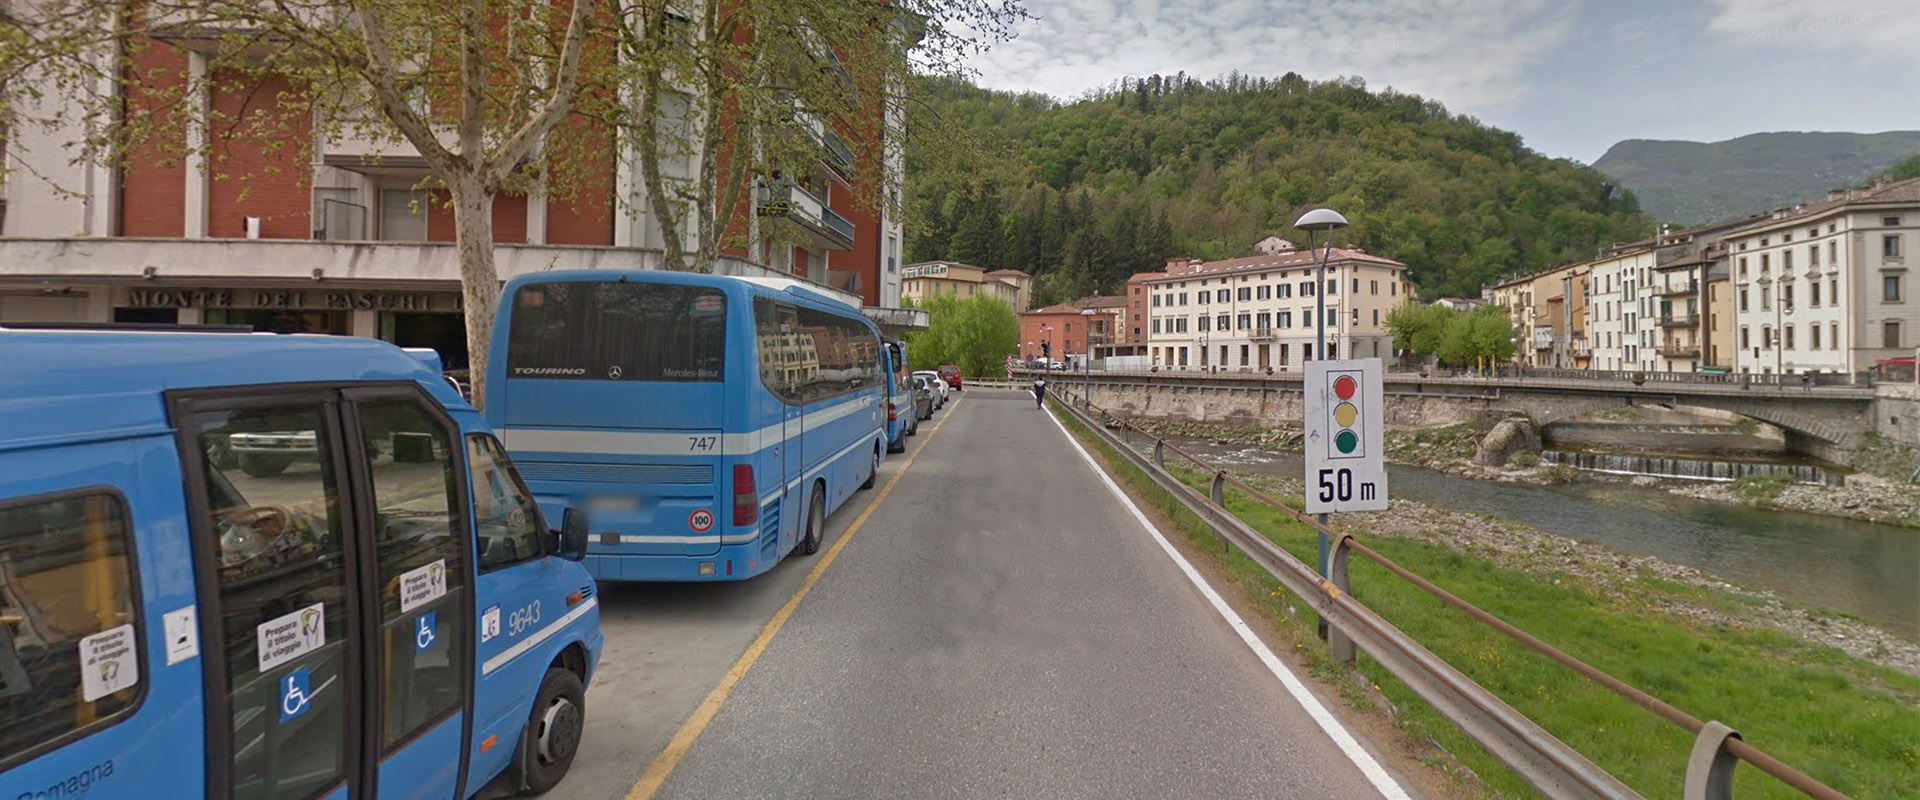 Foto: autobus in Appennino